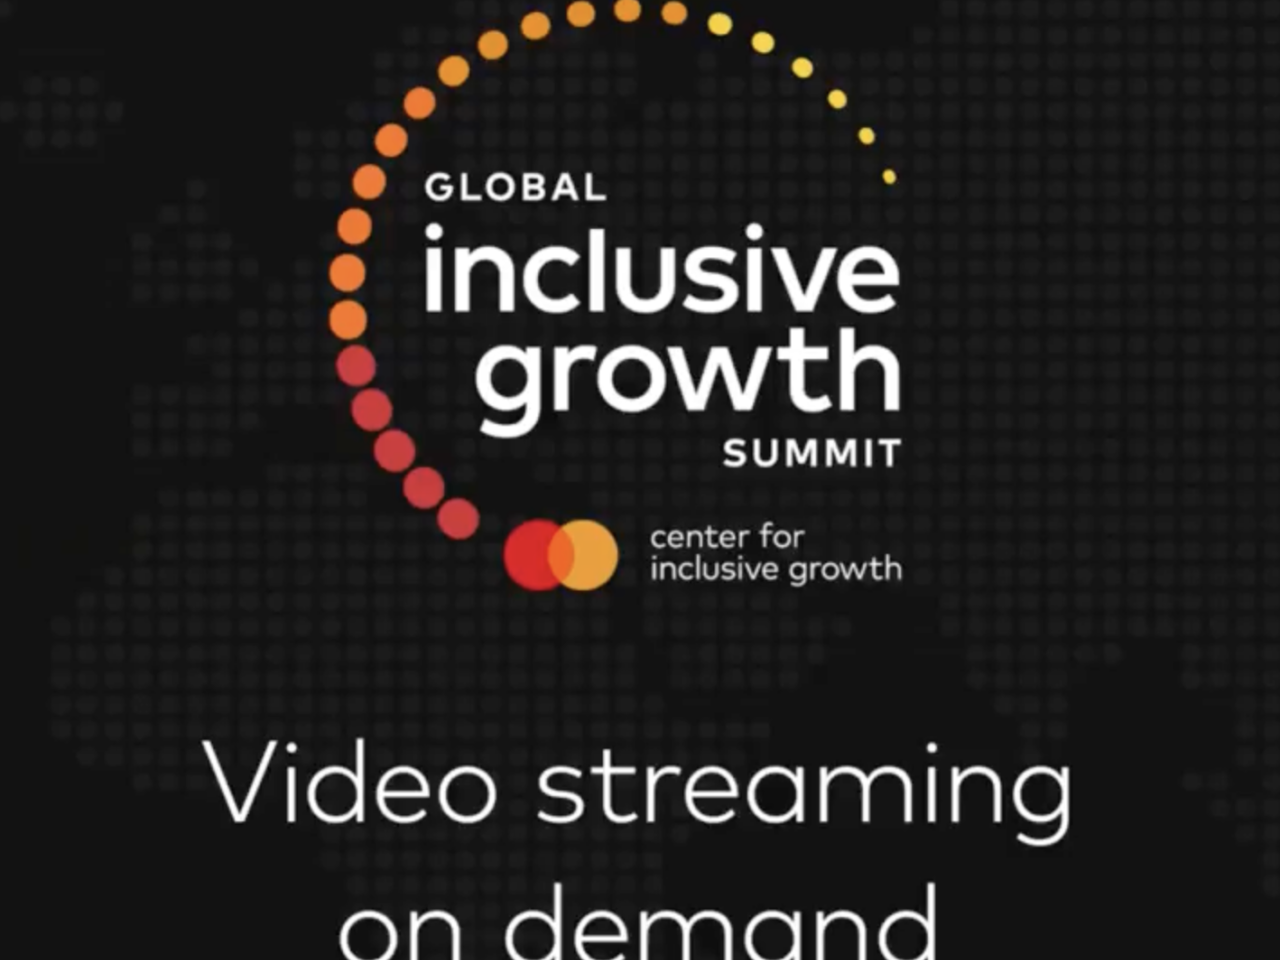 Global Inclusive growth summit logo